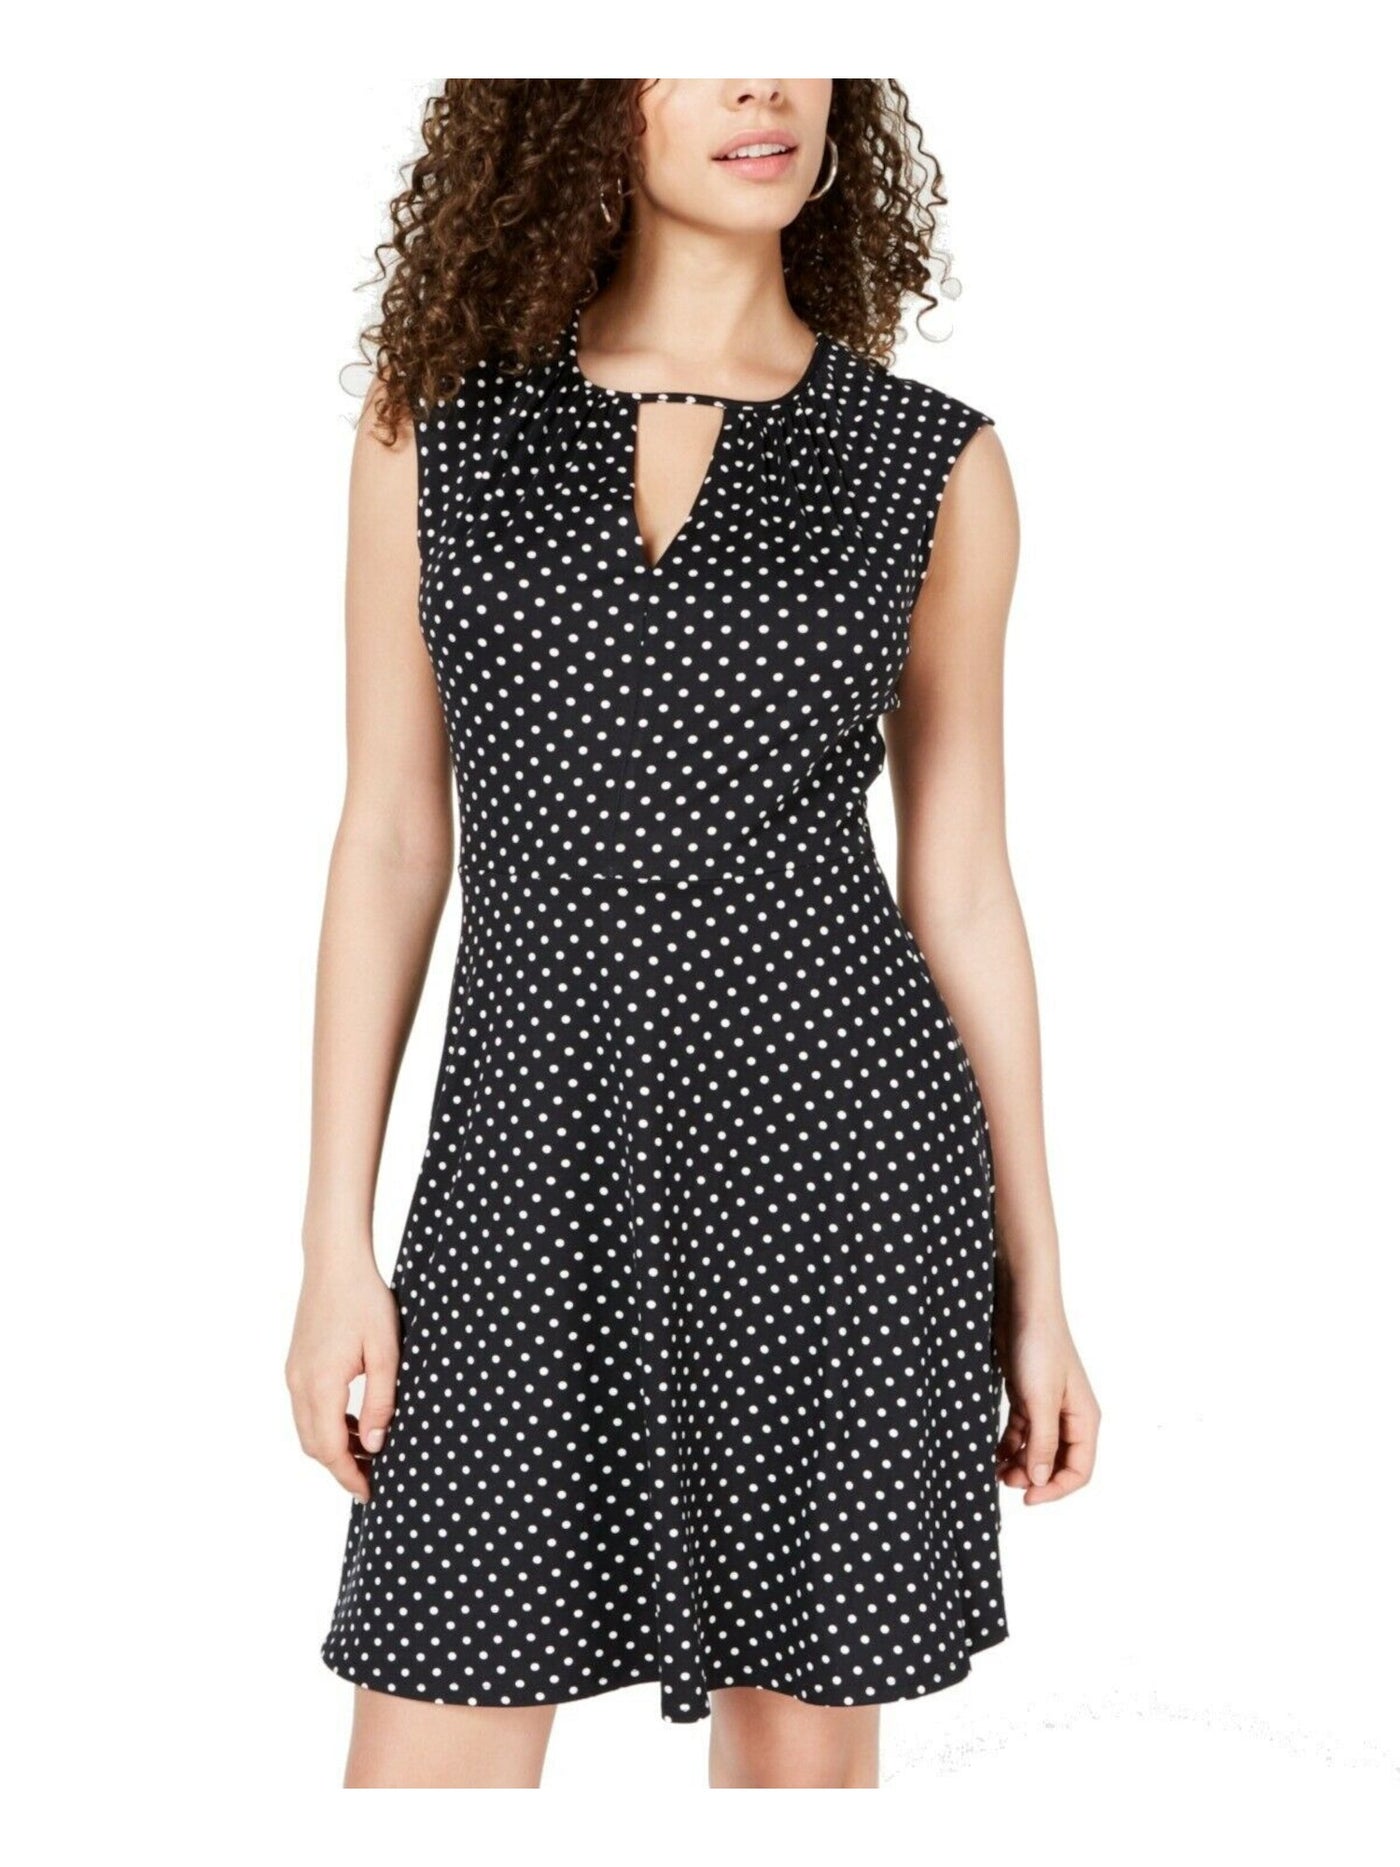 BEBOP Womens Black Polka Dot Sleeveless Short A-Line Dress Juniors Size: XXS